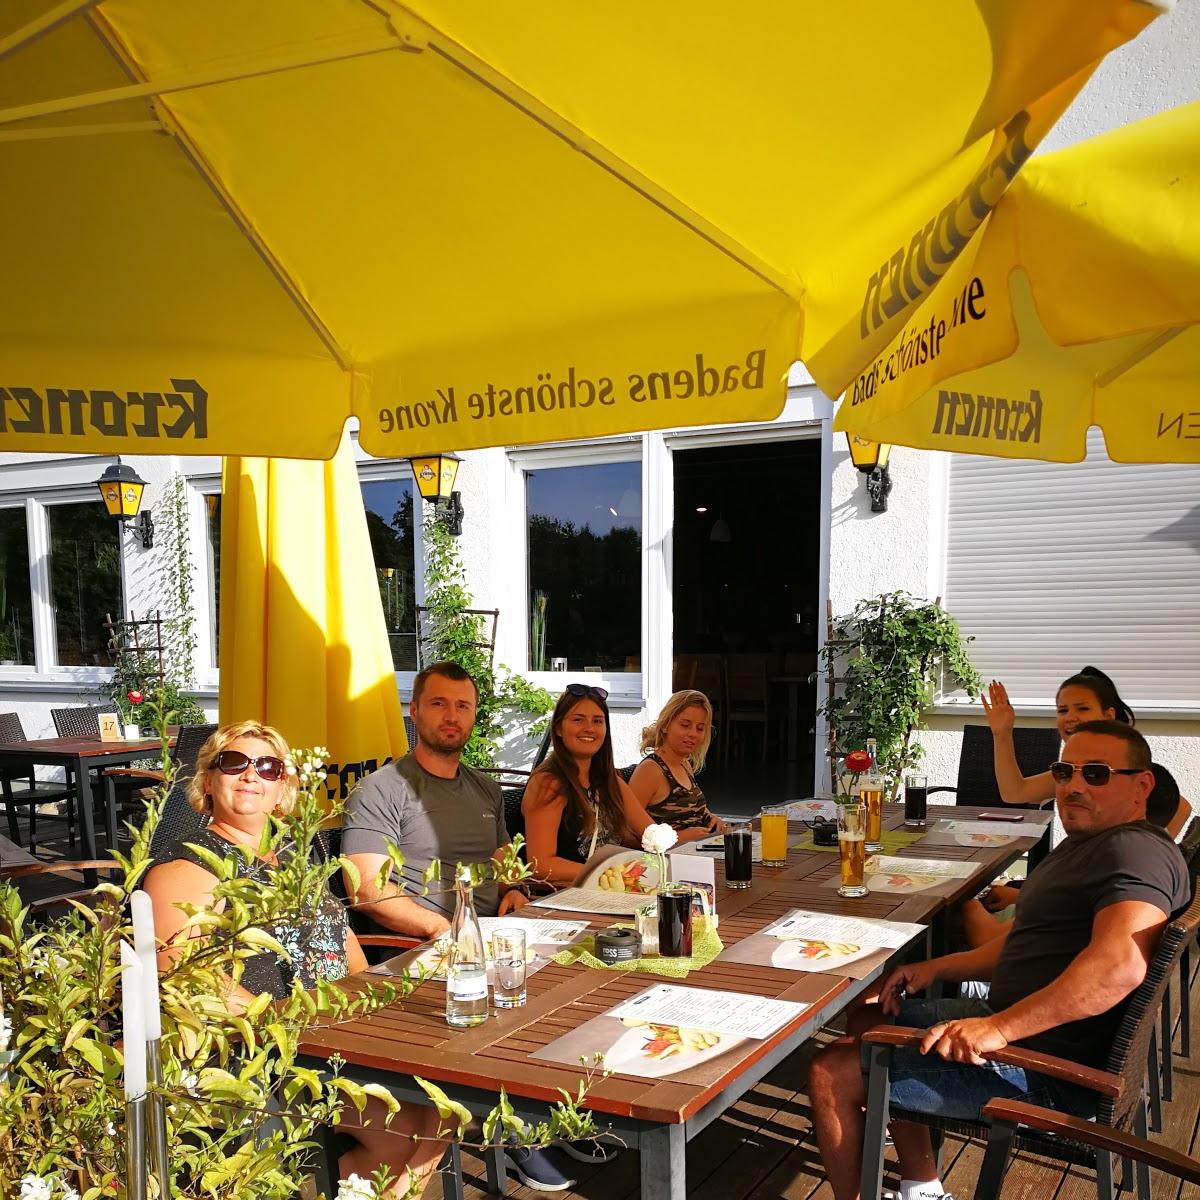 Restaurant "Ess & Sporthaus Diersheim" in Rheinau